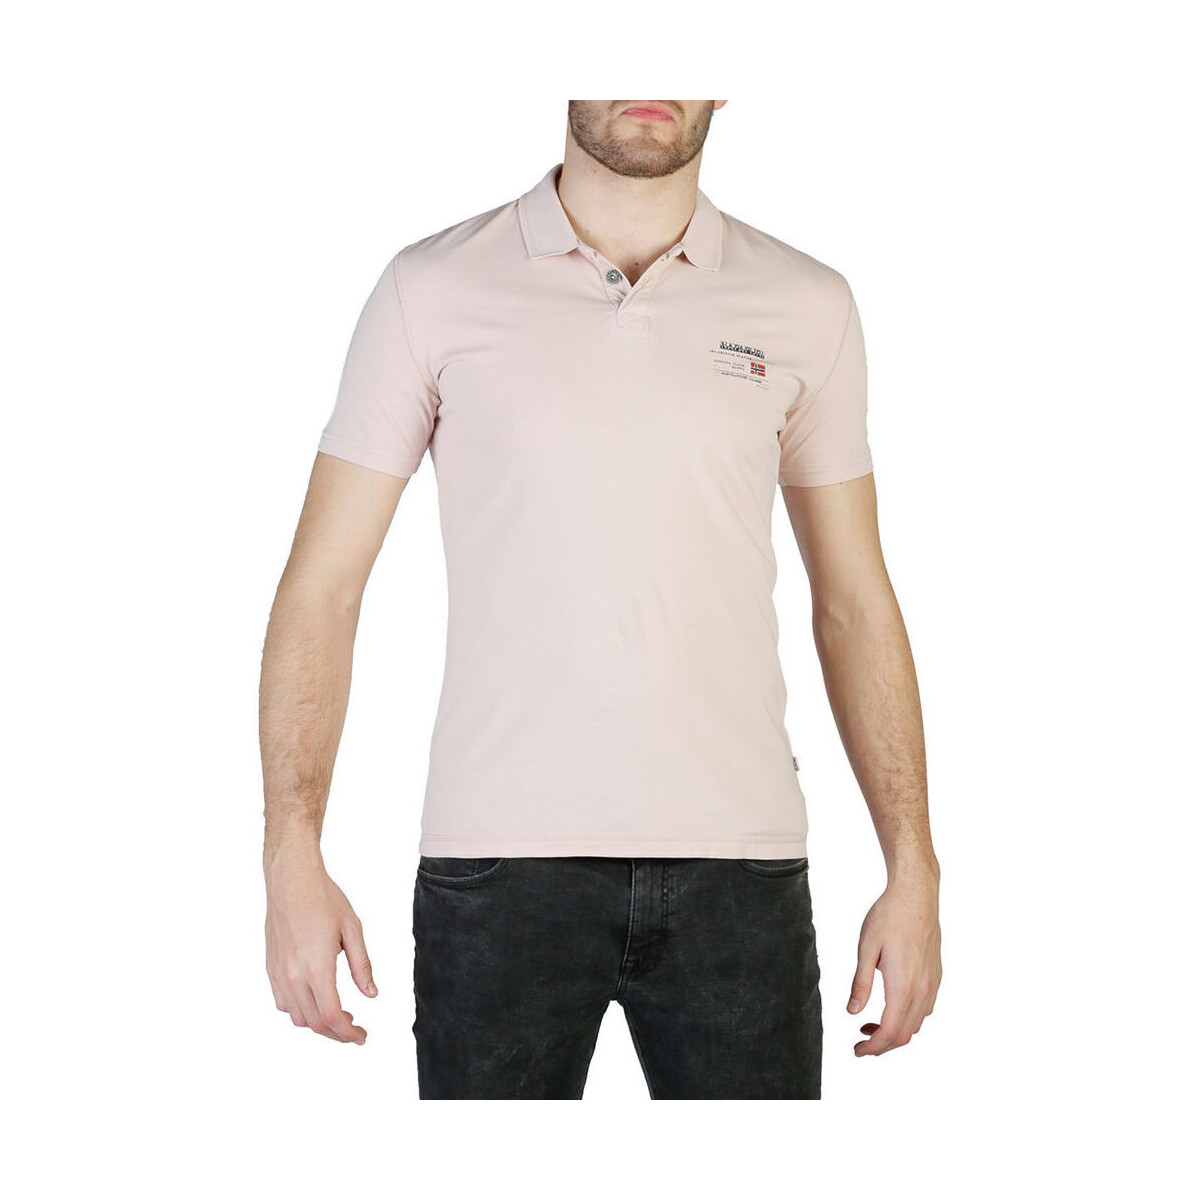 textil Herre Polo-t-shirts m. korte ærmer Napapijri - n0yhqk Pink